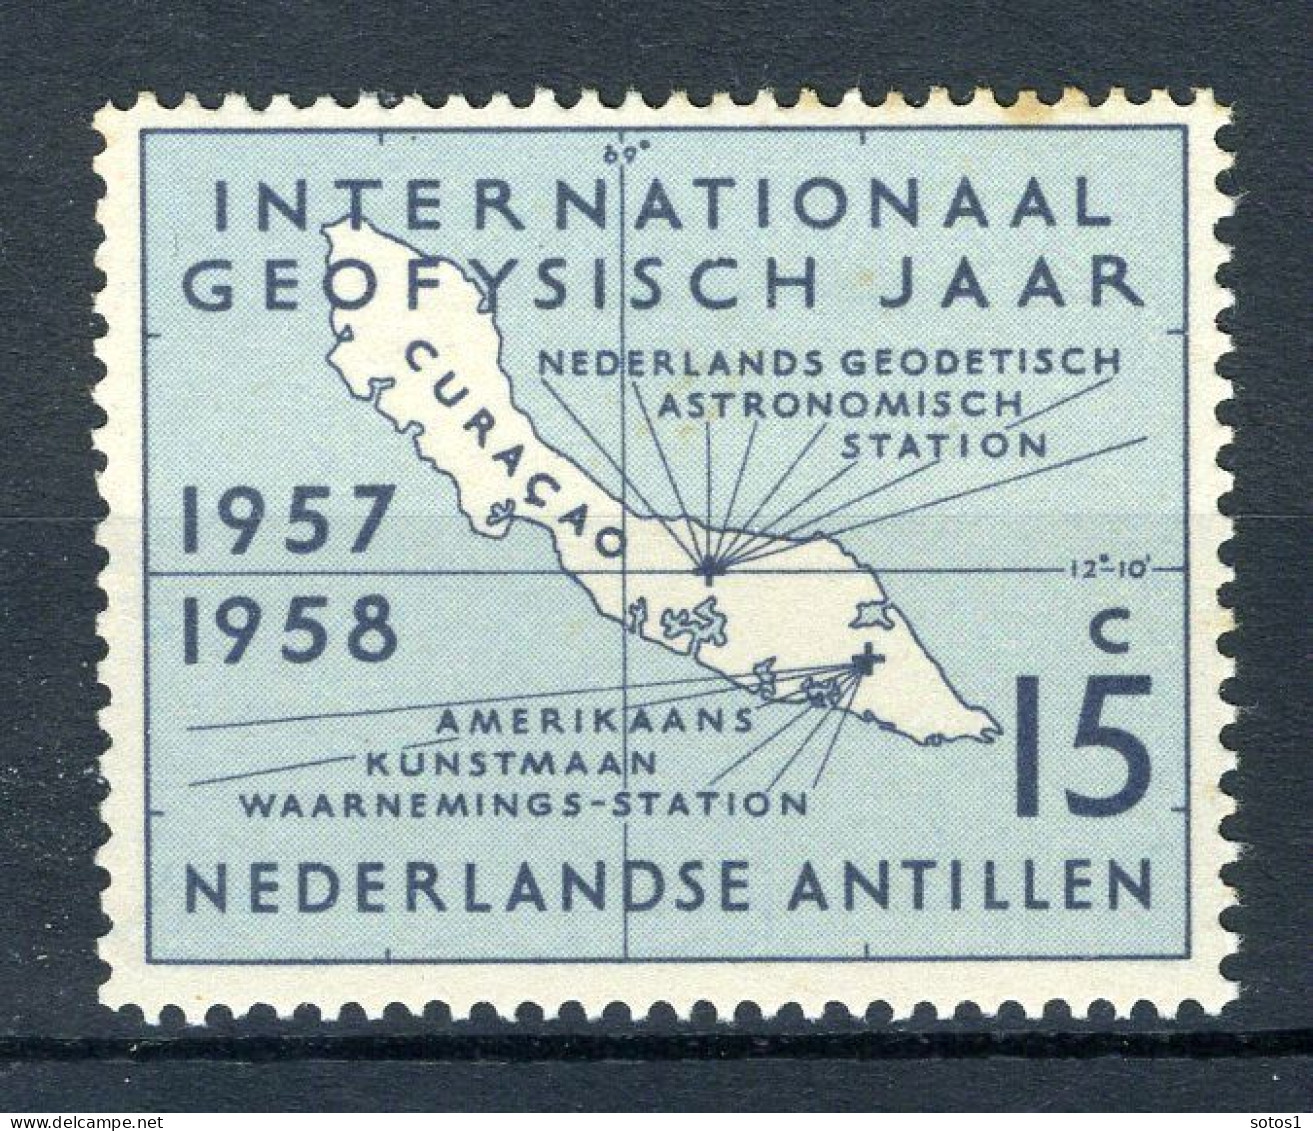 NL. ANTILLEN 270 MH 1957 - Internationaal Geofysisch Jaar. - Curaçao, Antilles Neérlandaises, Aruba